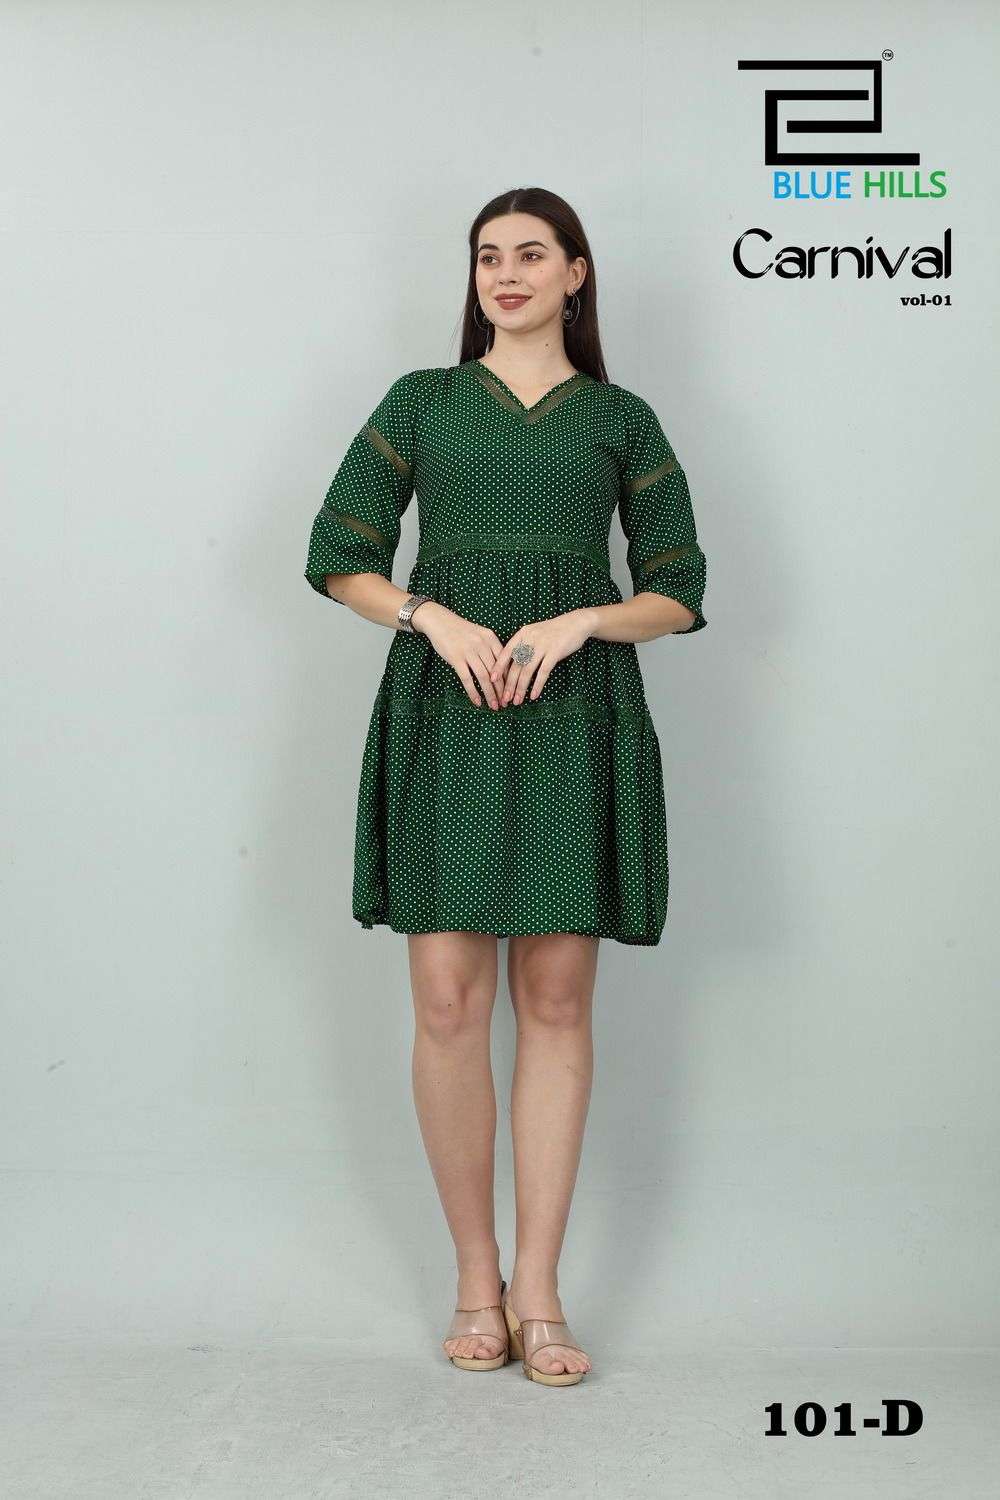 bluehills carnival vol-1 101 series fancy look designer latest kurtis manufacturer surat 